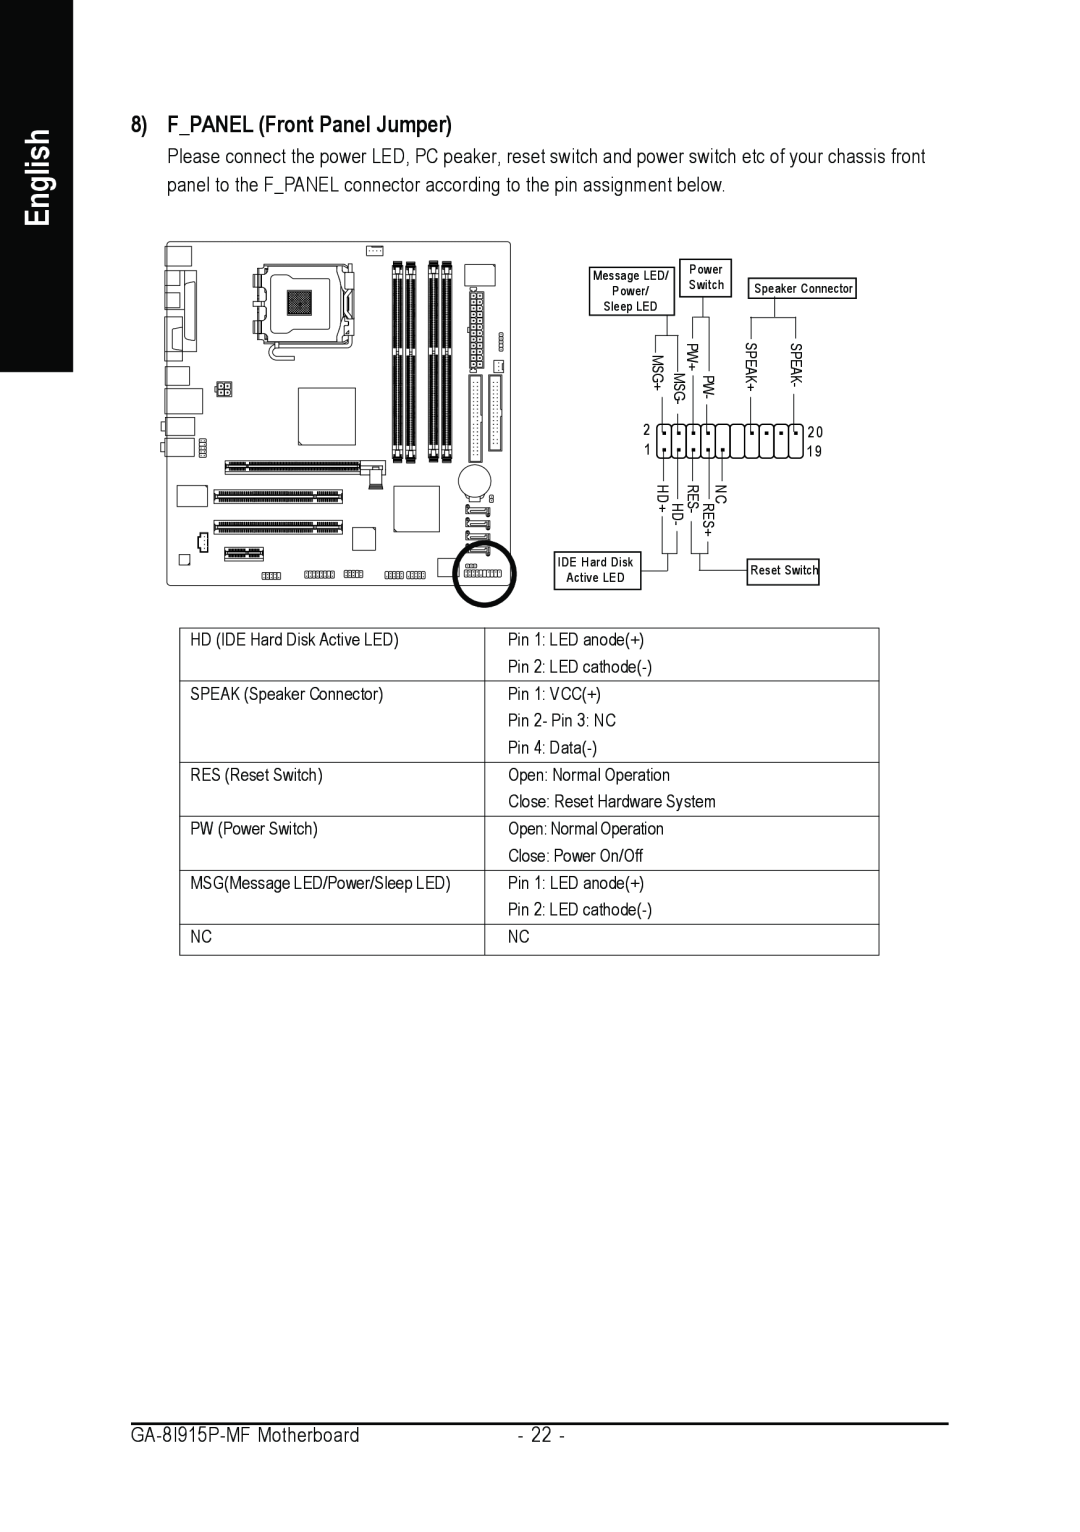 Gigabyte GA-8I915P-MF user manual FPANEL Front Panel Jumper, English, MSGMessage LED/Power/Sleep LED 